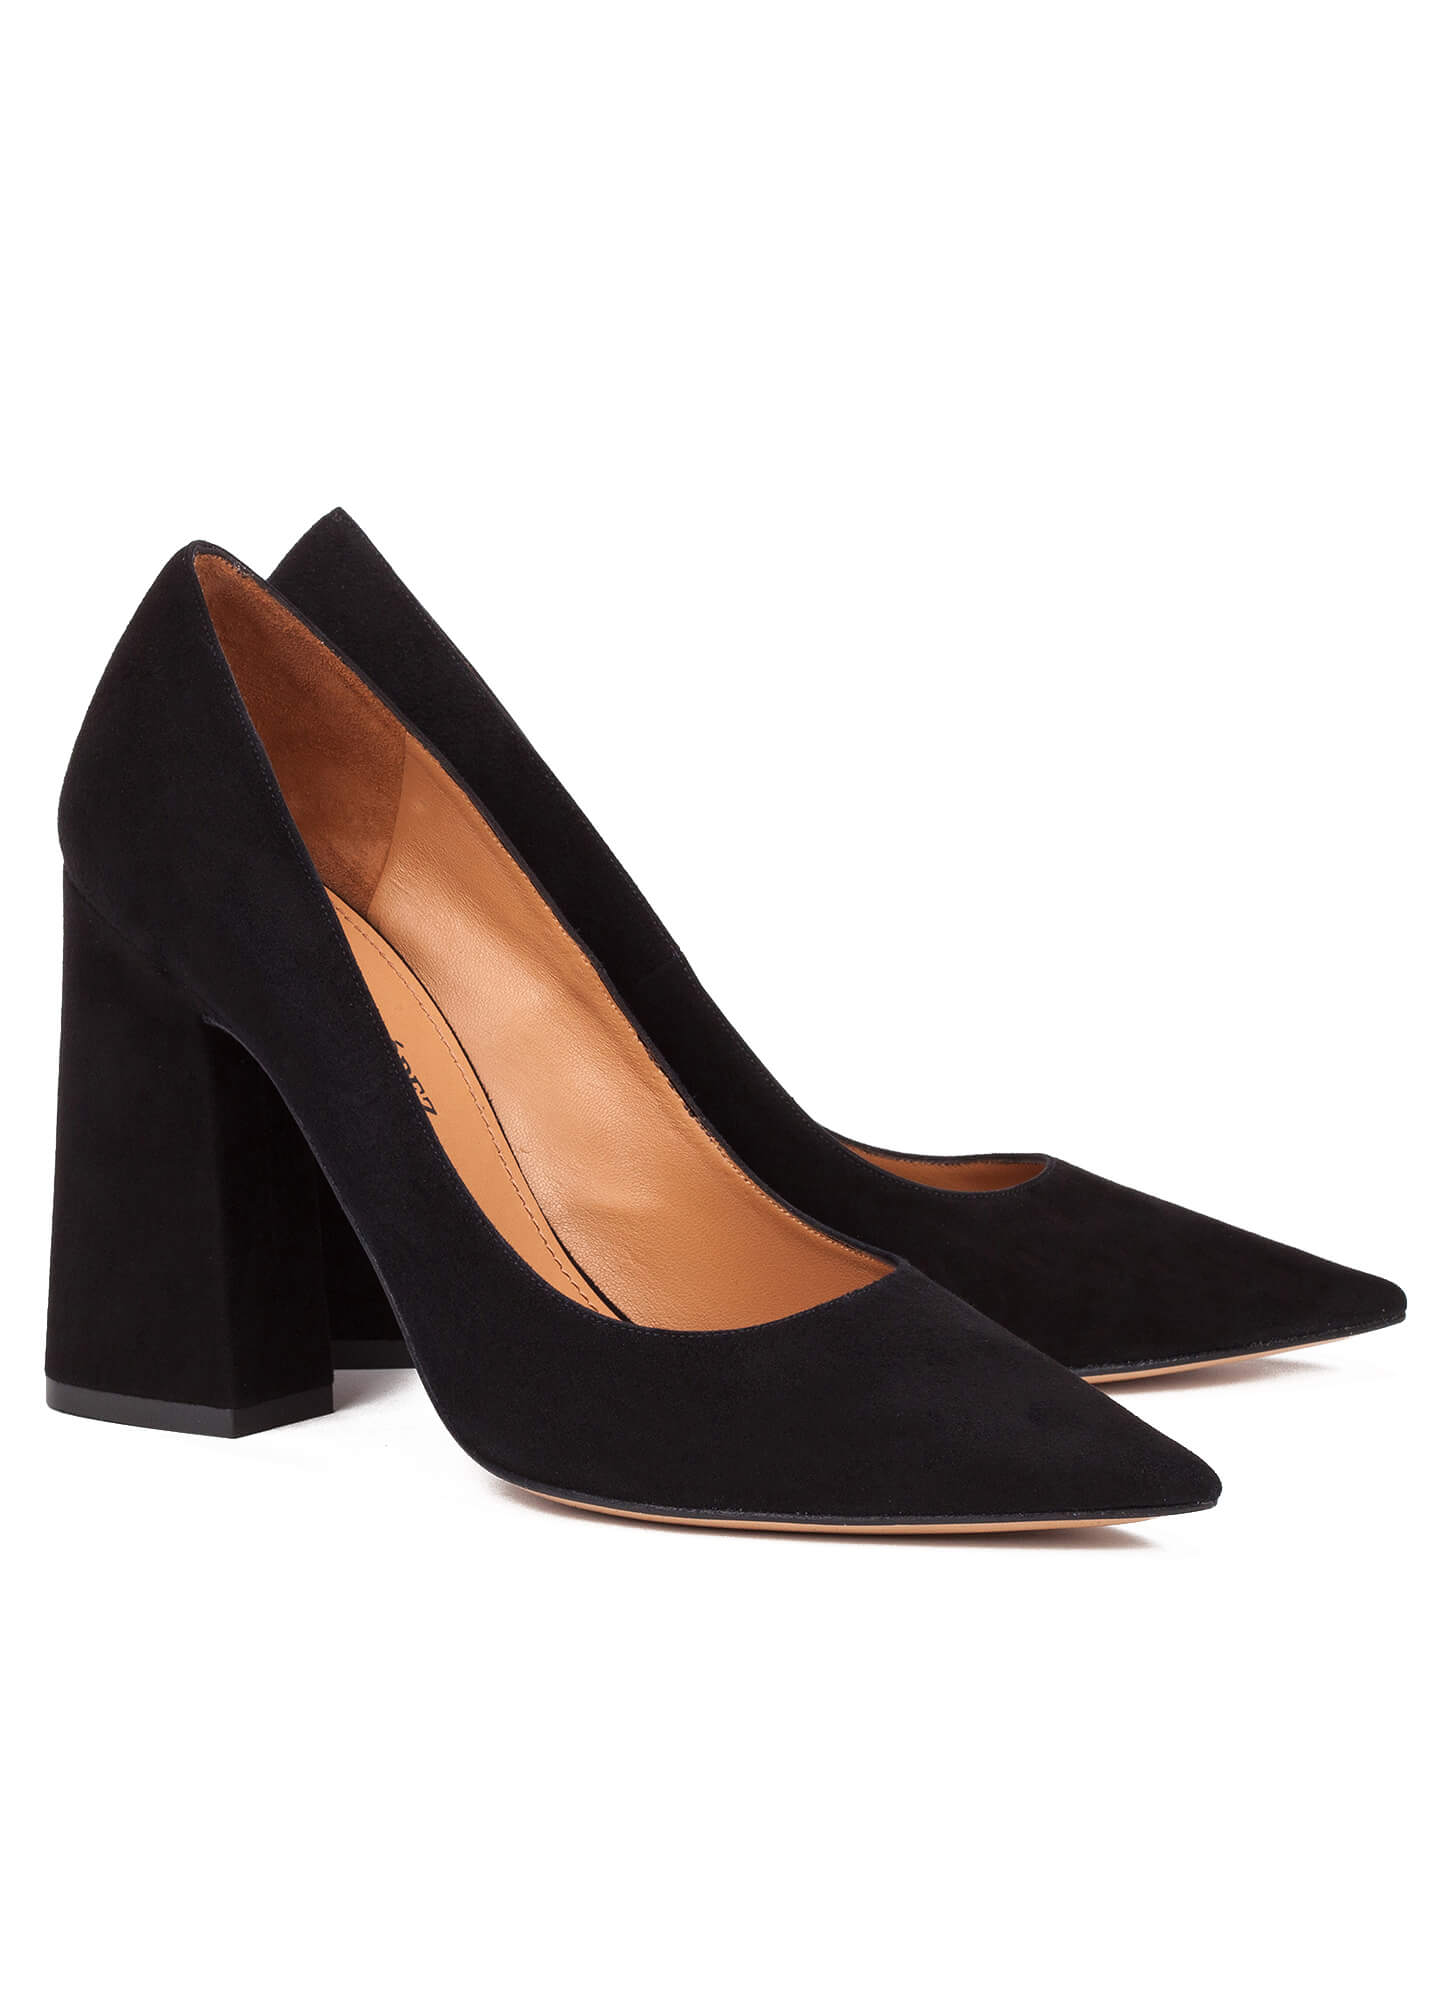 black block heels leather